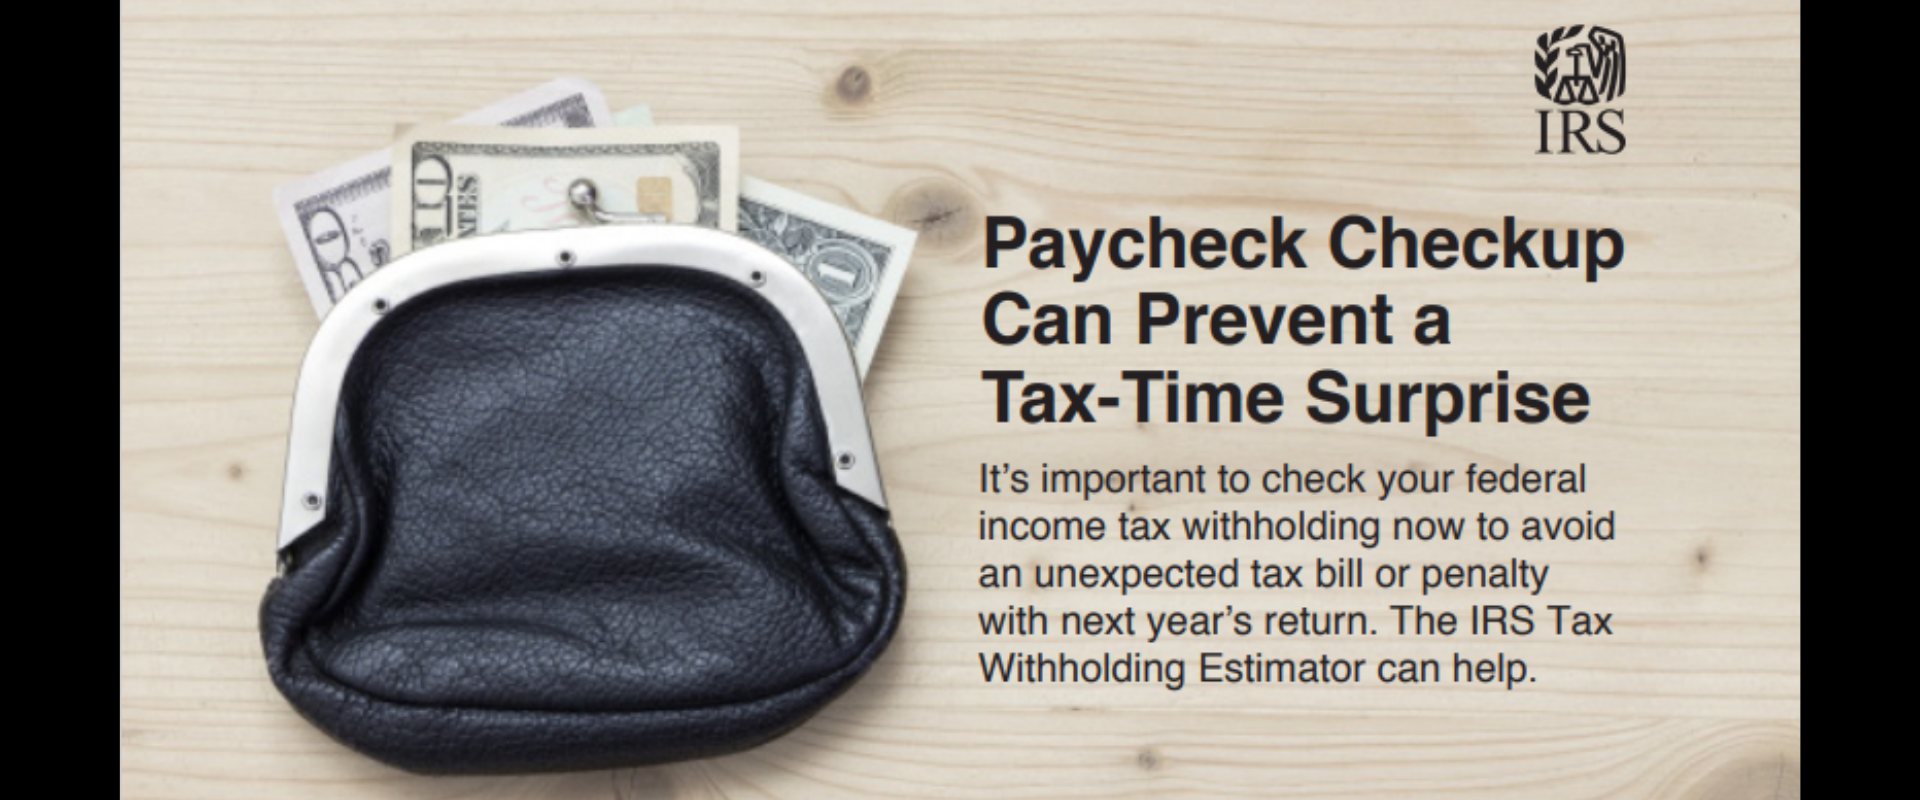 IRS Tax-time